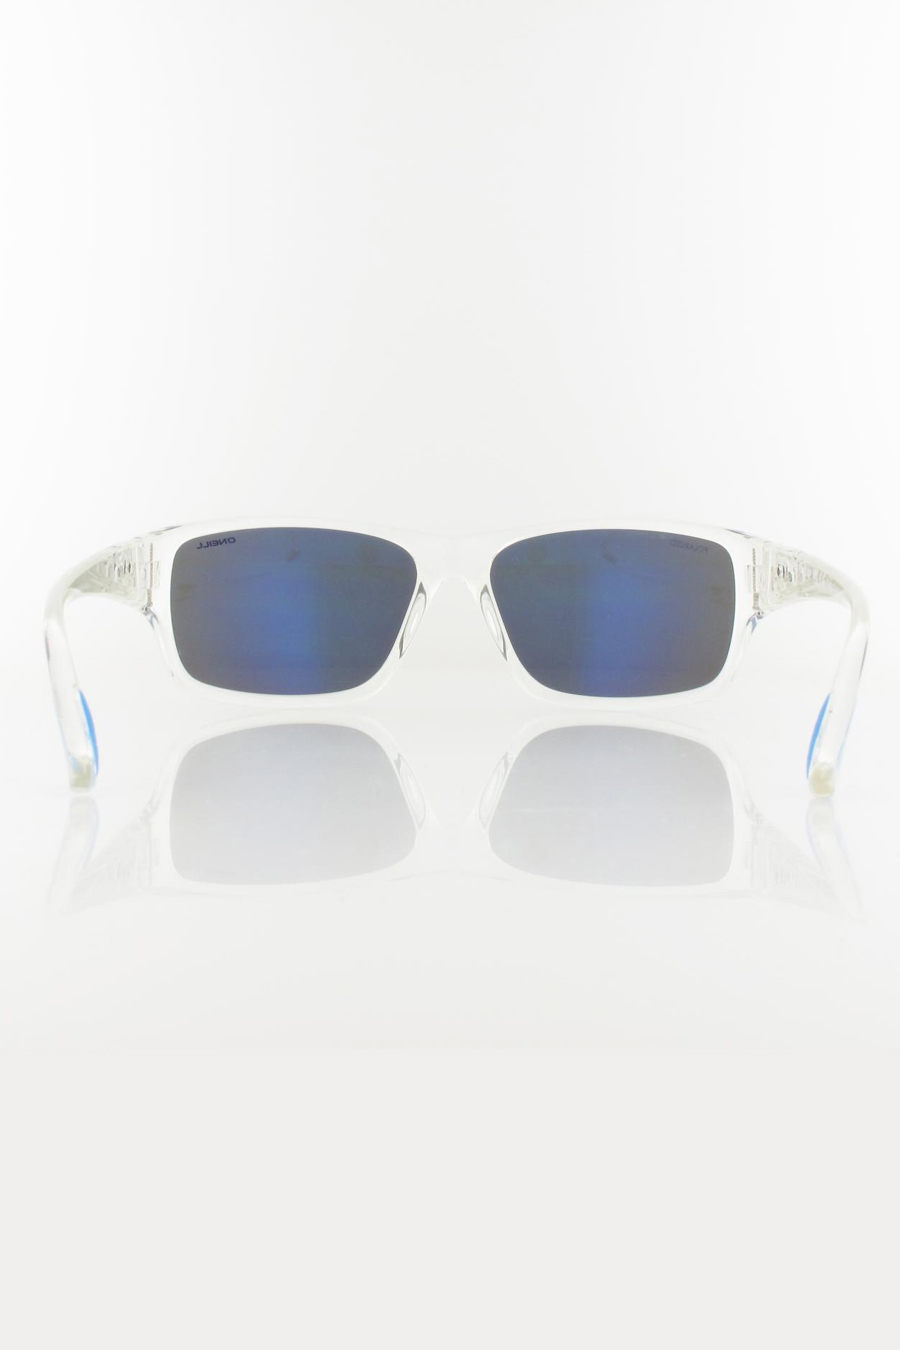 Солнечные очки ONEILL ONS-9023-20-113P